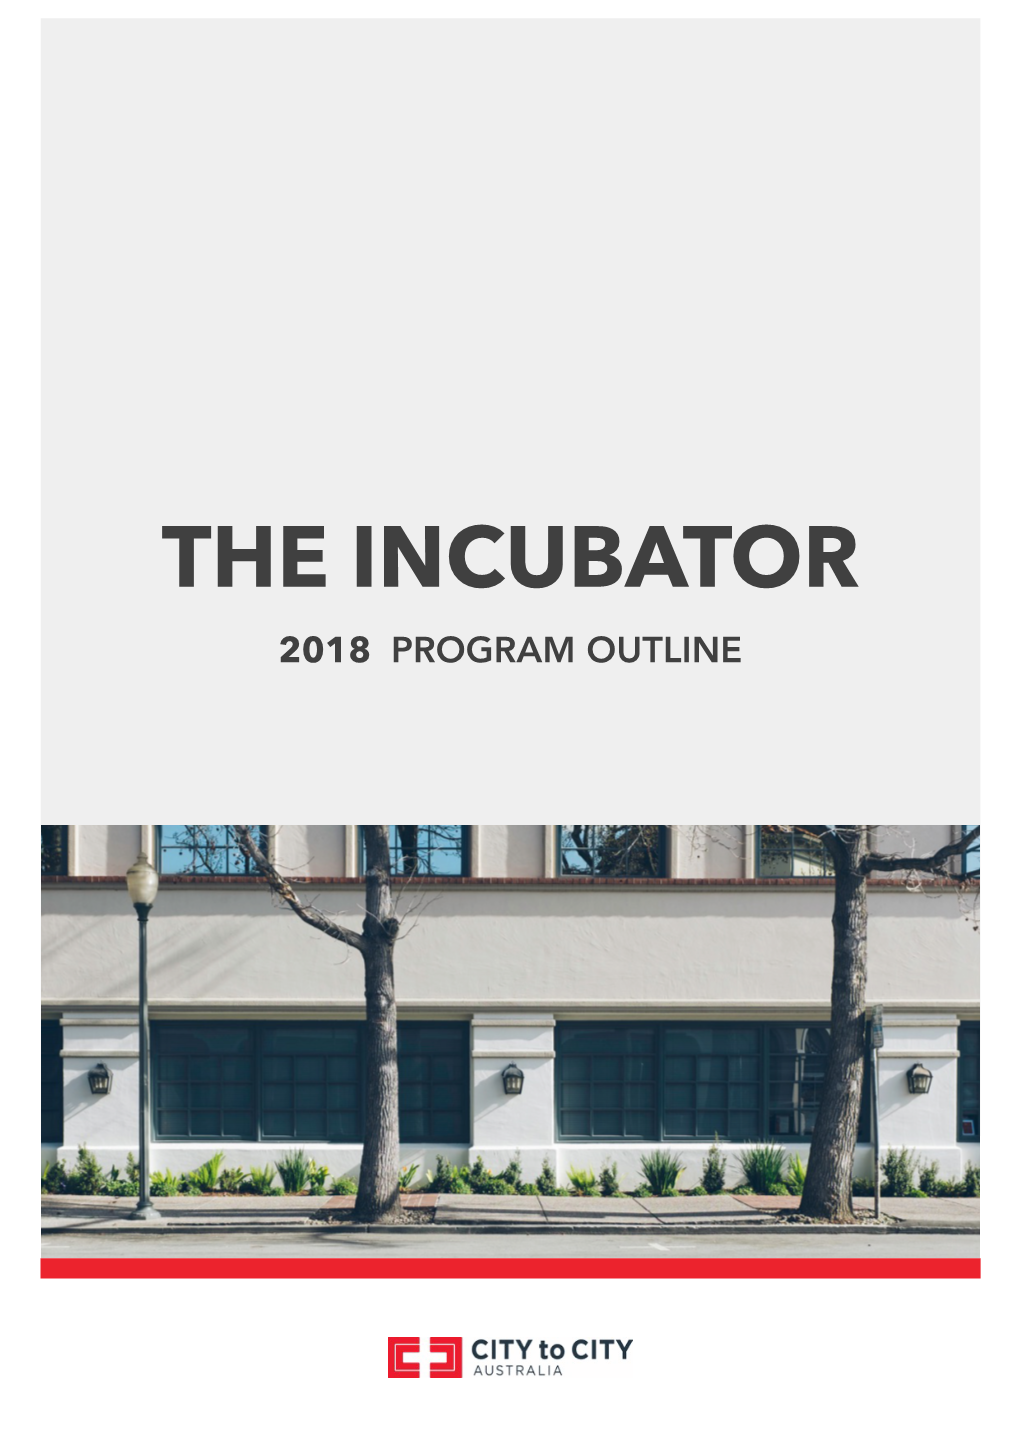 The Incubator the Incubator